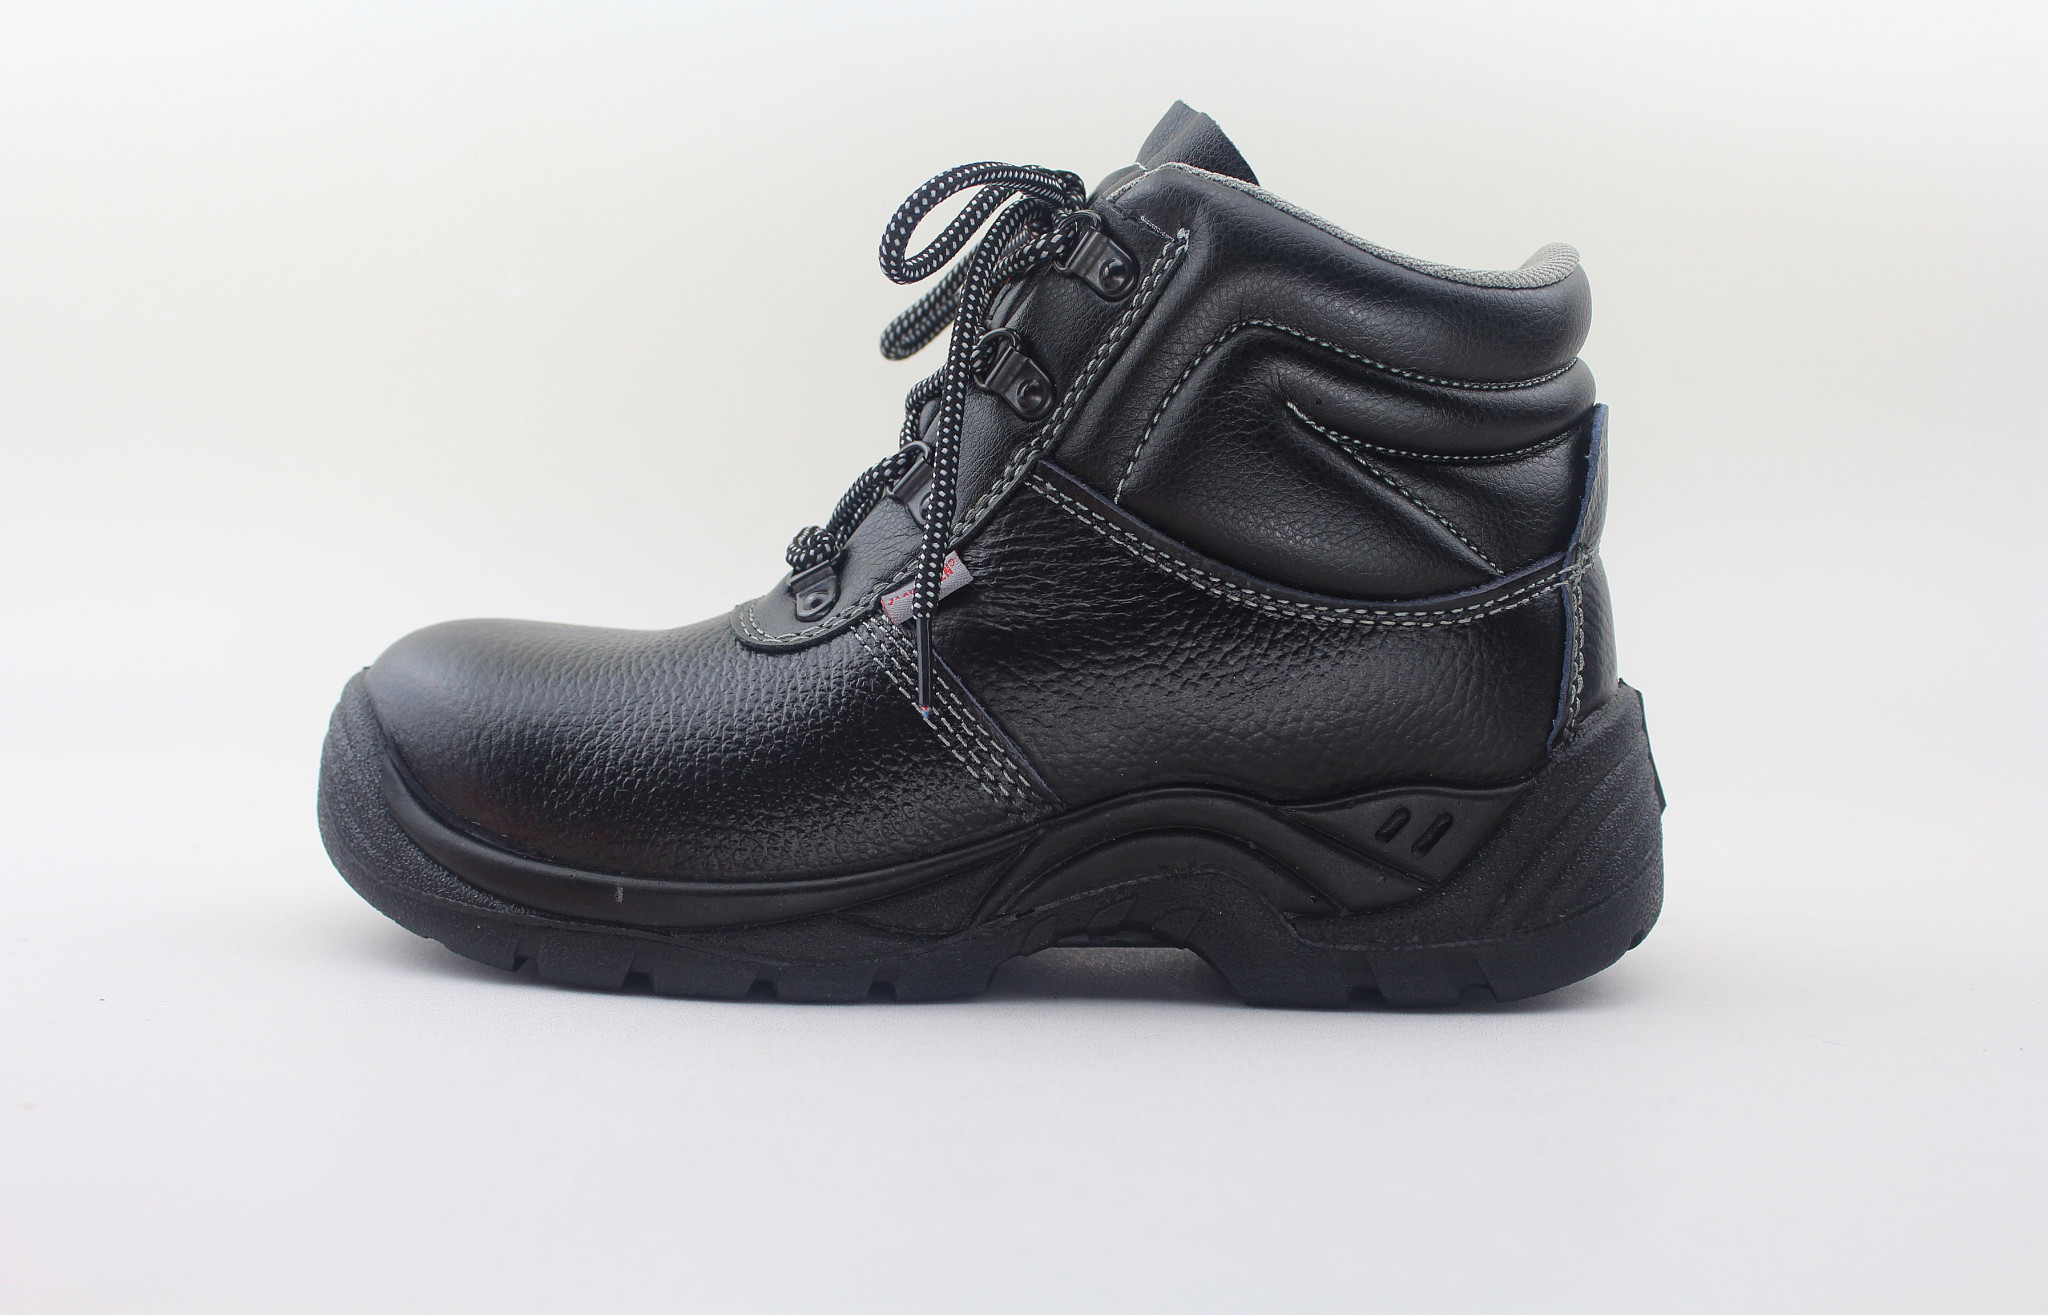 Jack Olsen Labor Protection Shoes